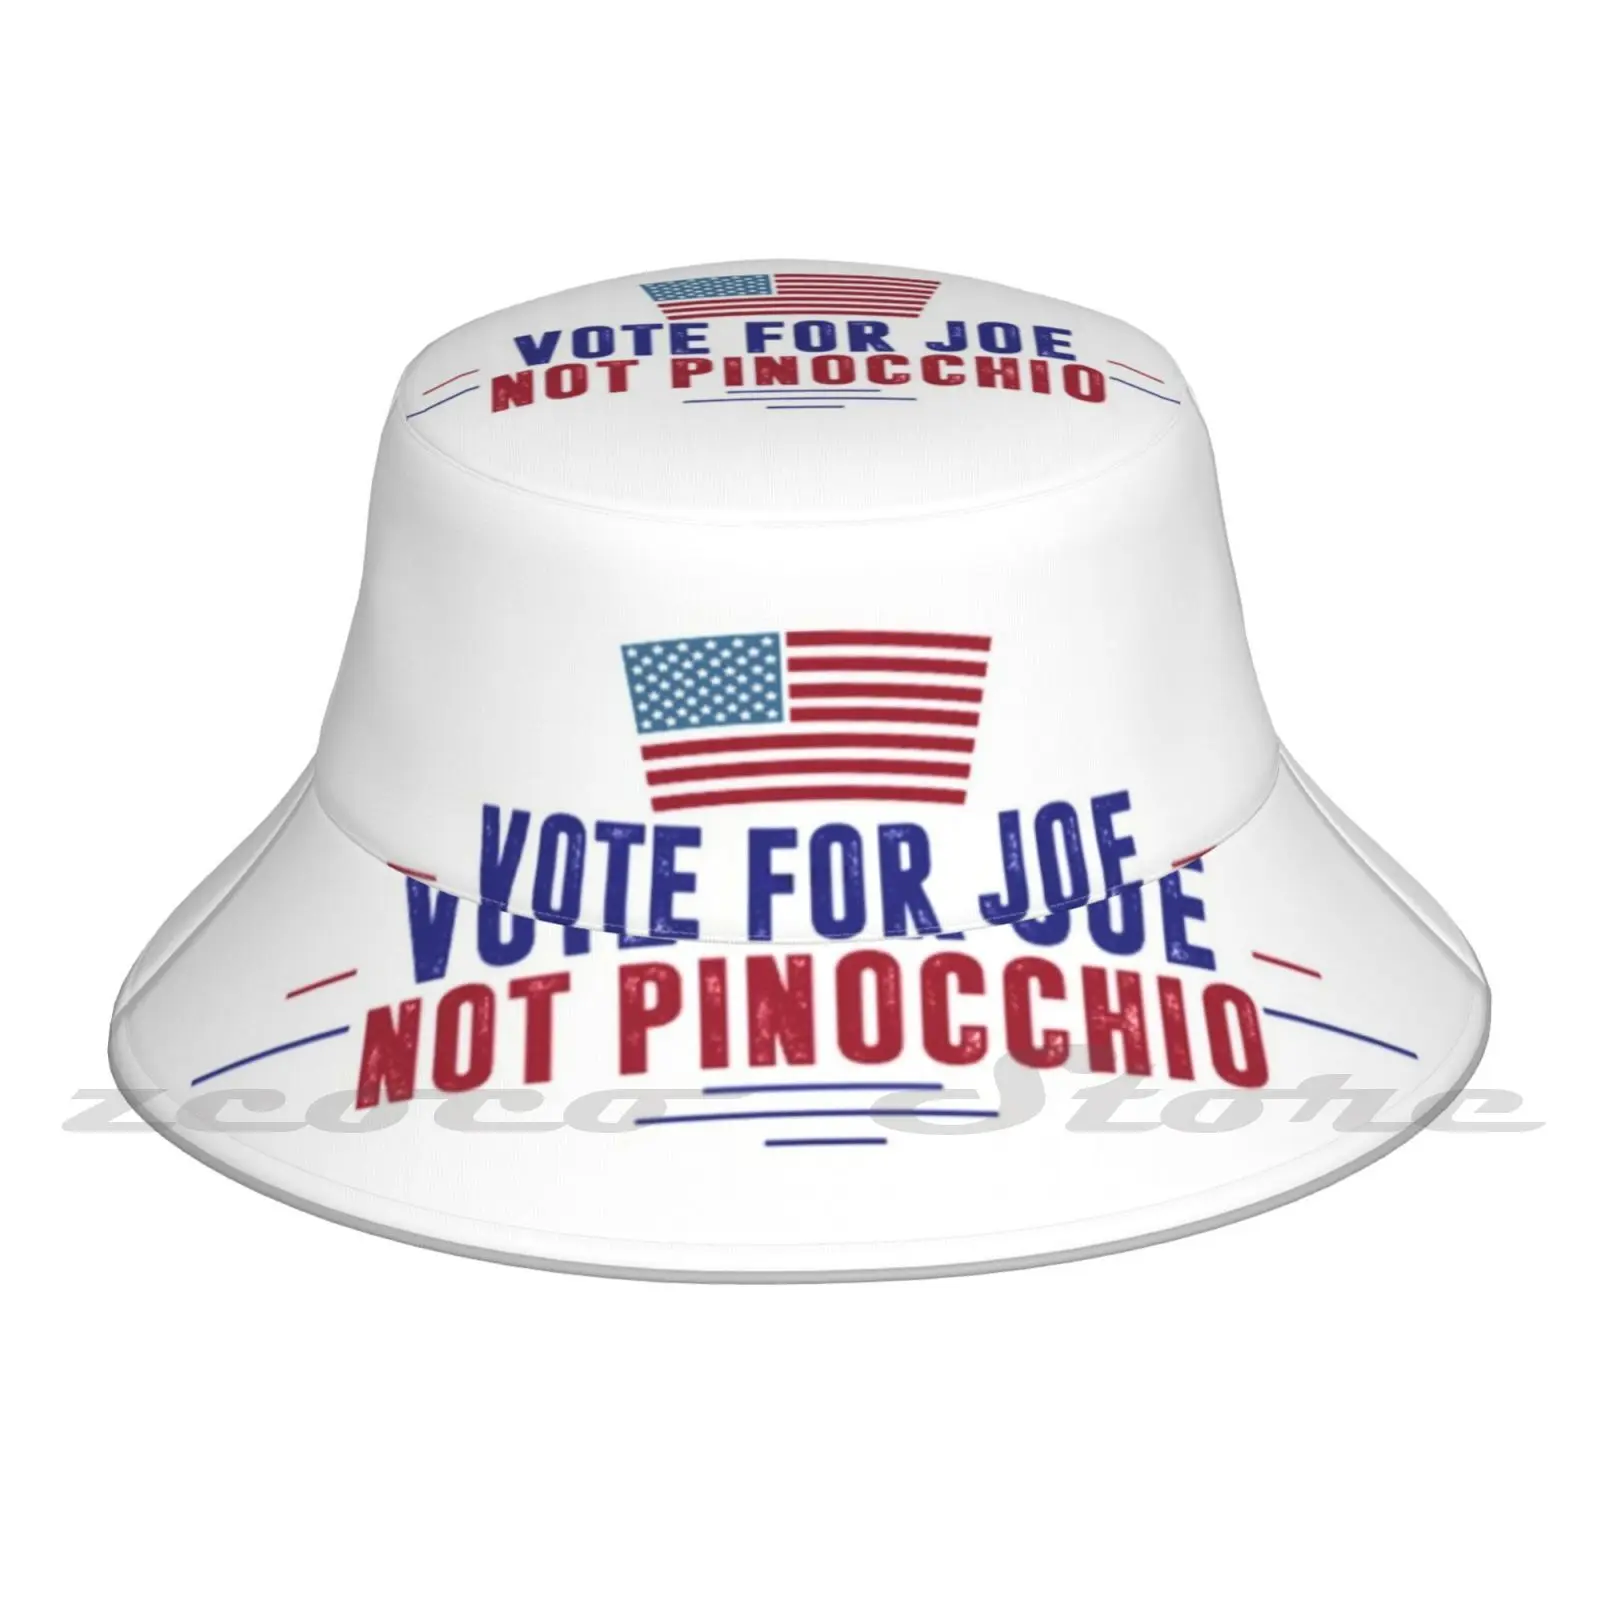 

Vote For Joe Not Bucket Hat Outdoor Sports Breathable Present Fashion Cap Biden Trump Election Presidential Politics Vote For